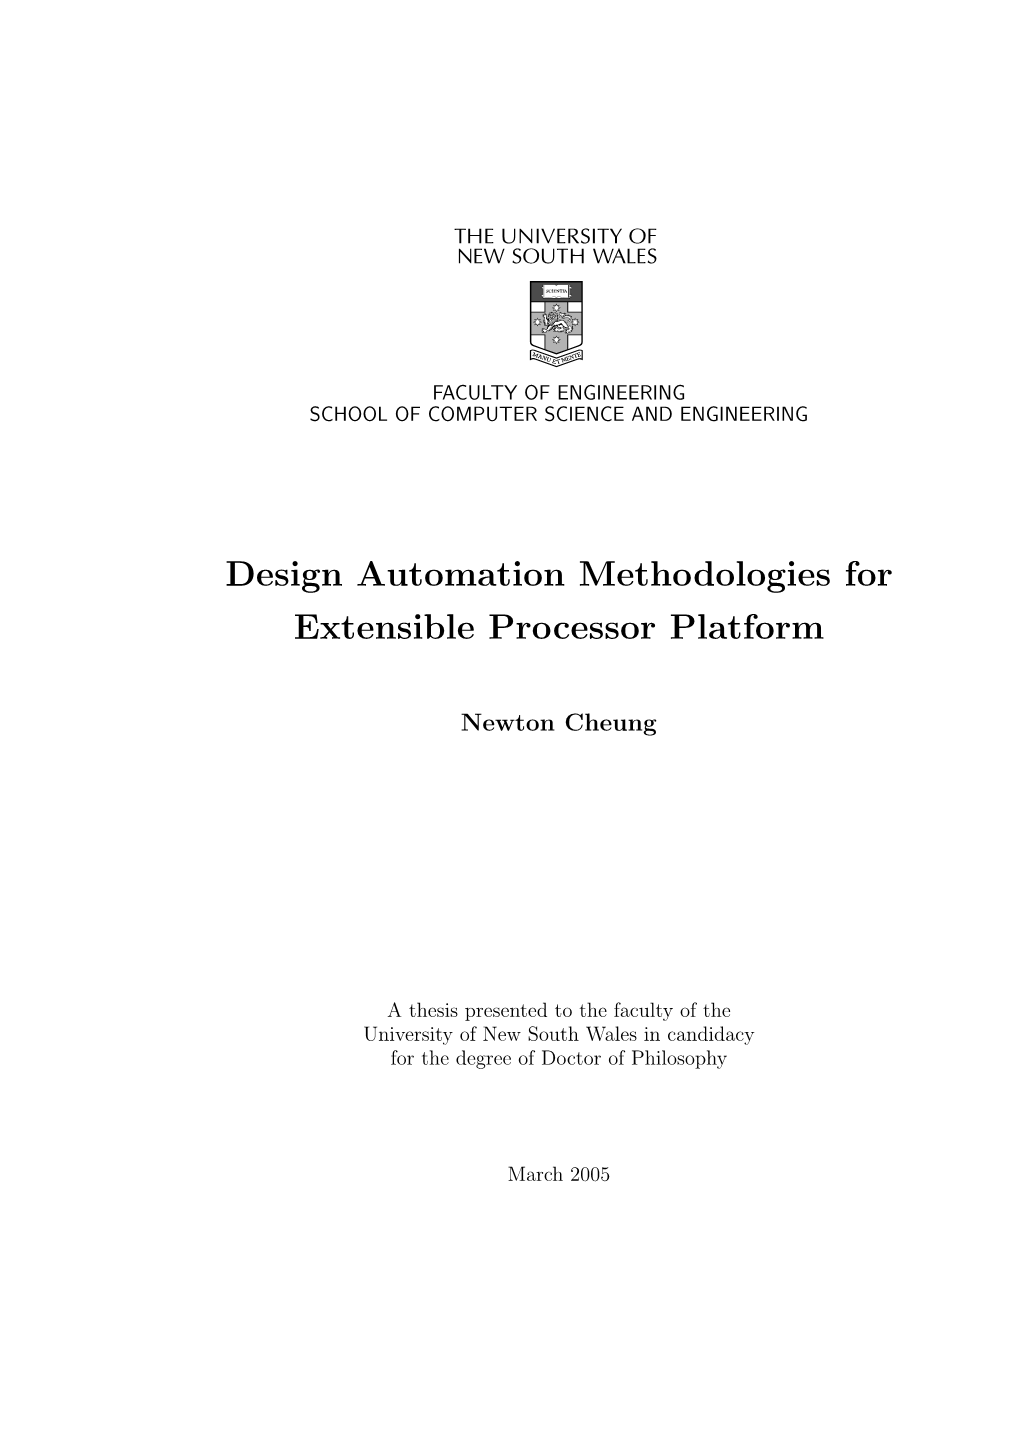 Design Automation Methodologies for Extensible Processor Platform